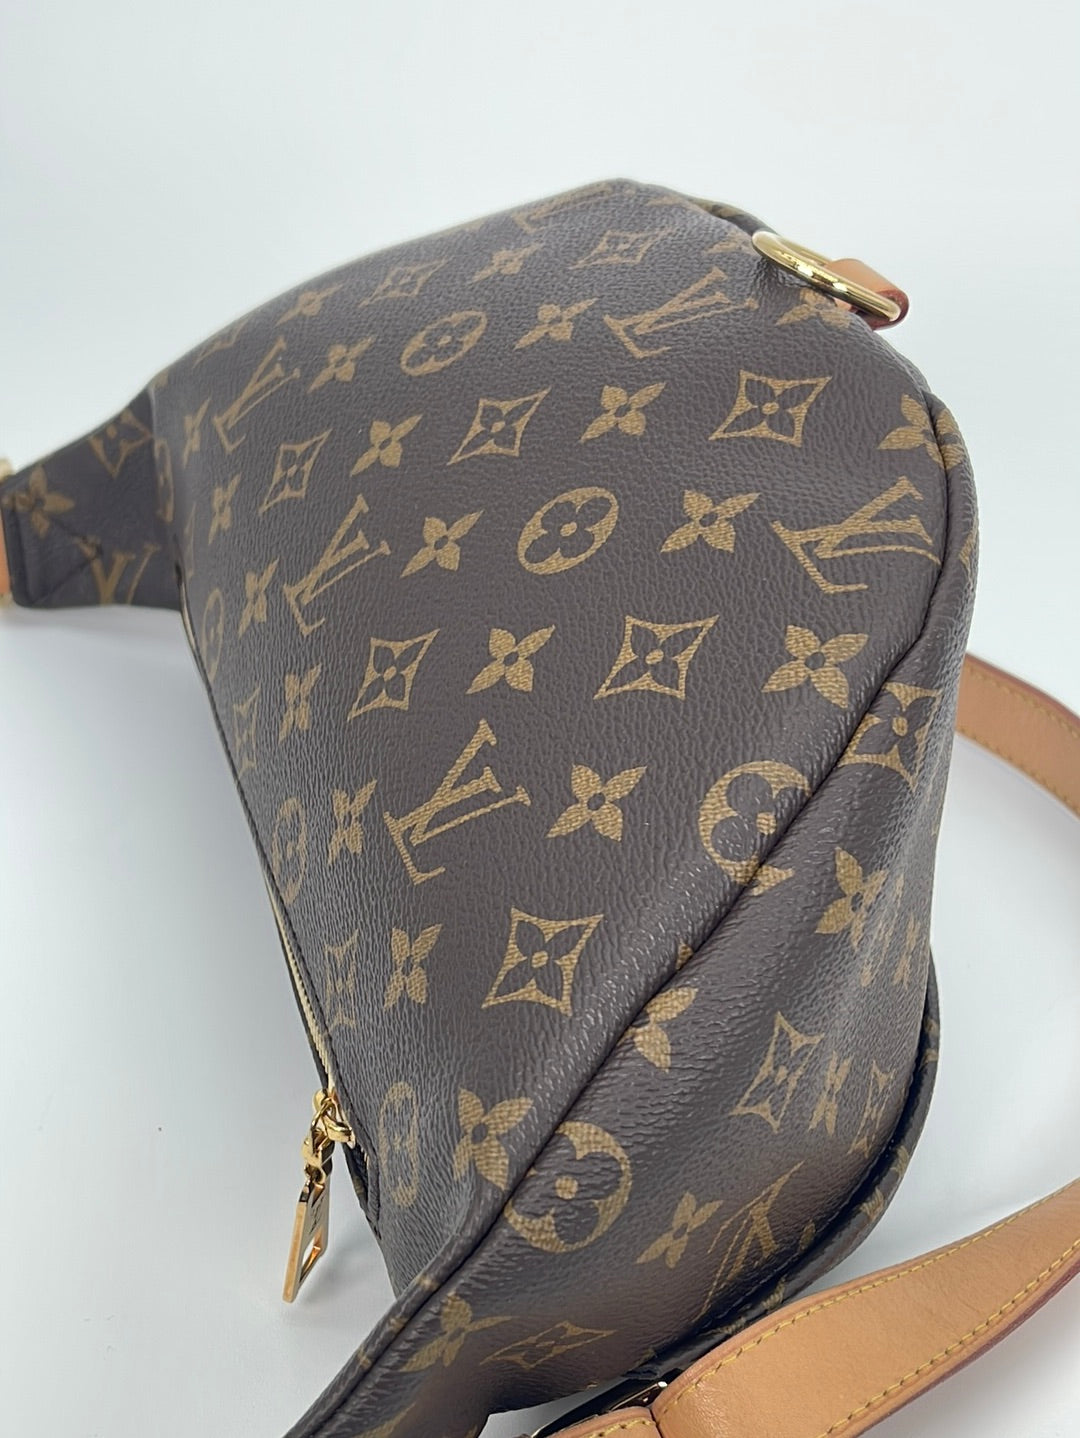 Louis Vuitton Bag SKU: B208 Material: Cow Leather + Monogram